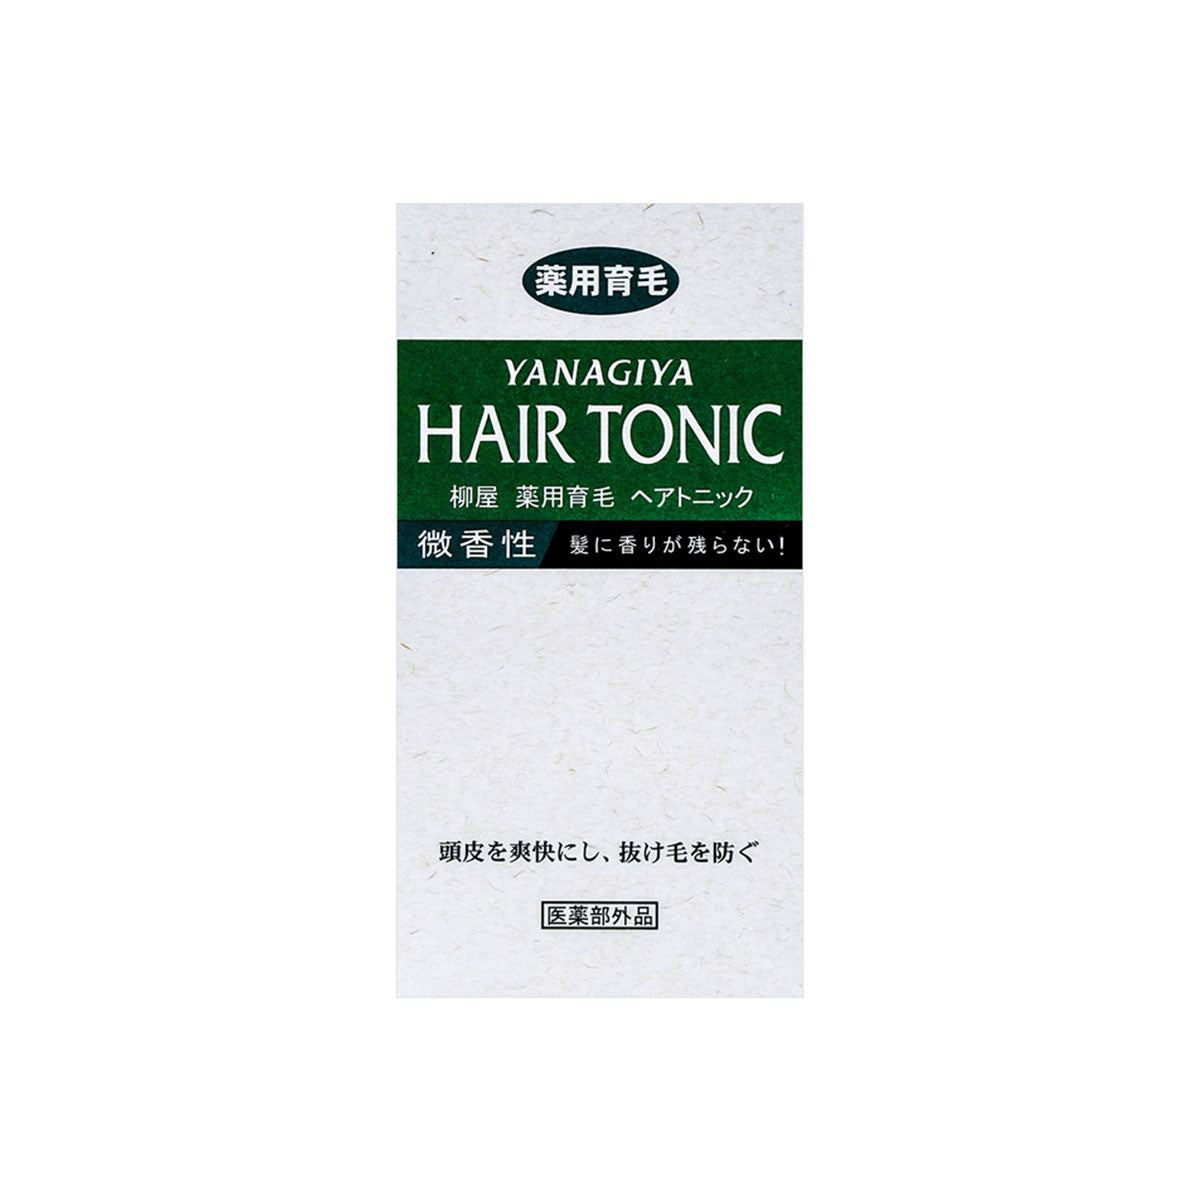 Hair Tonic 240ml slight scent